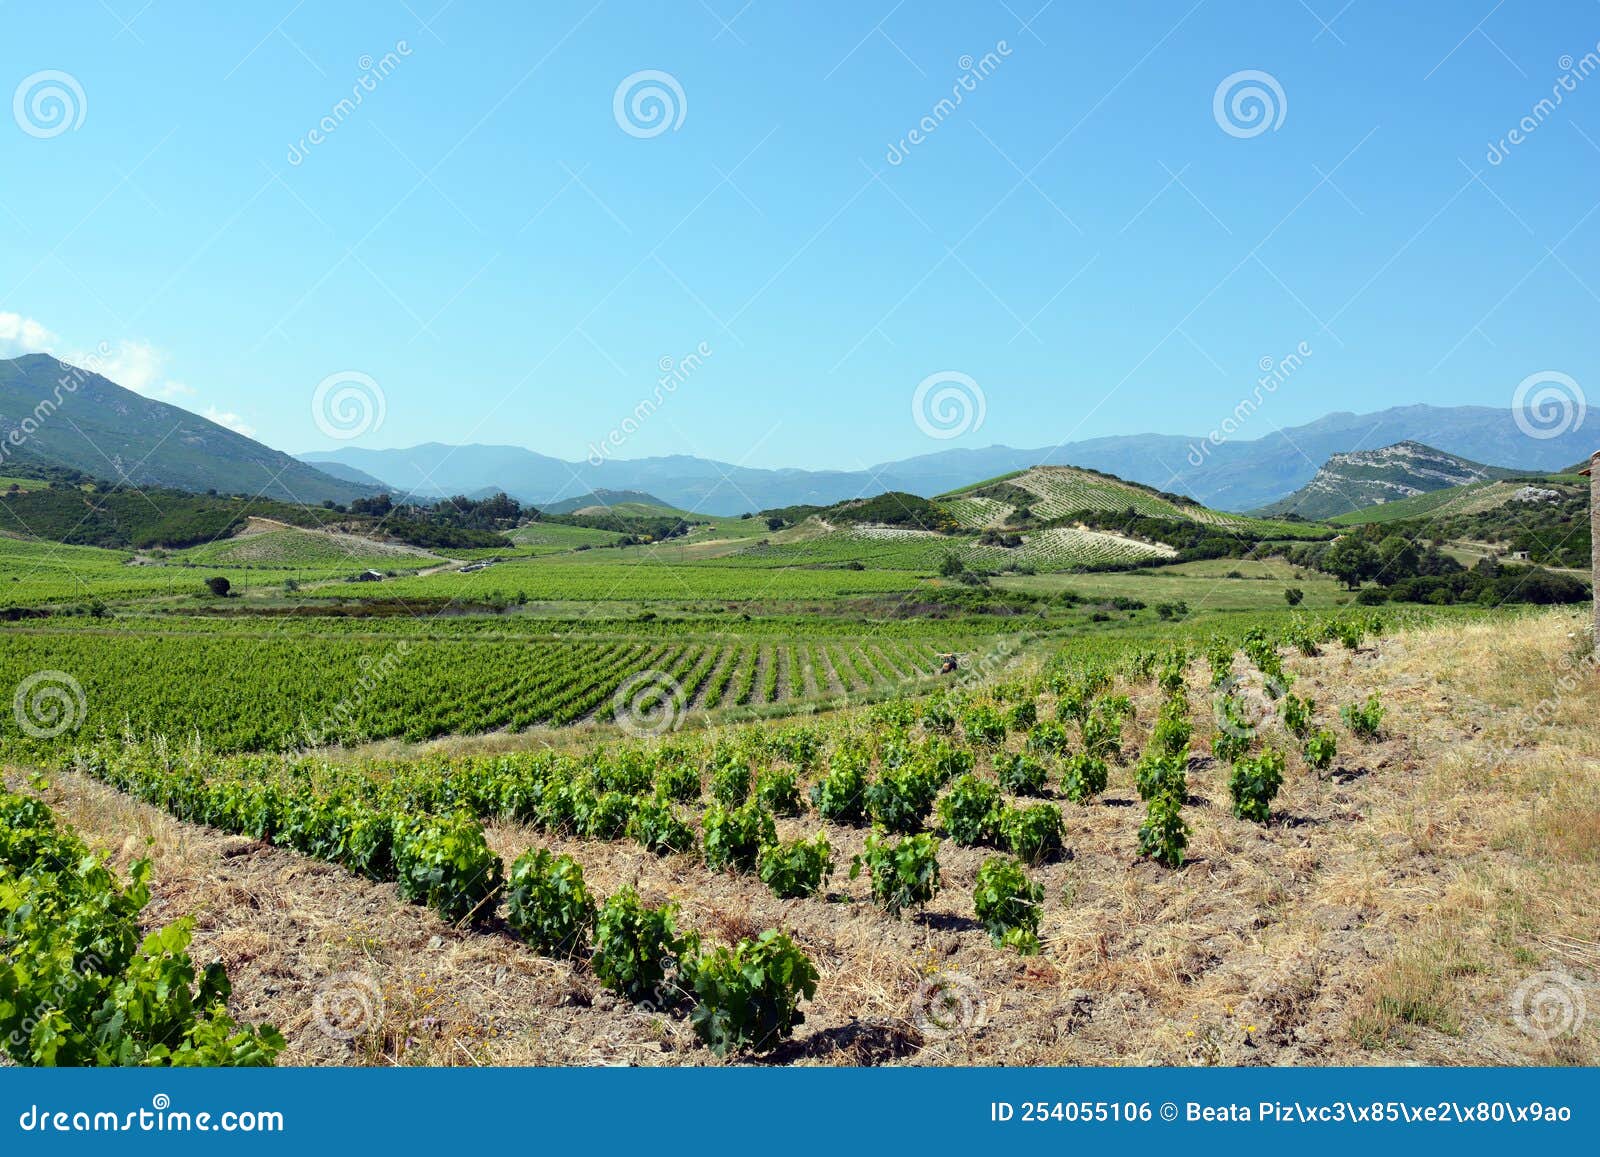 vineyard in patrimonio